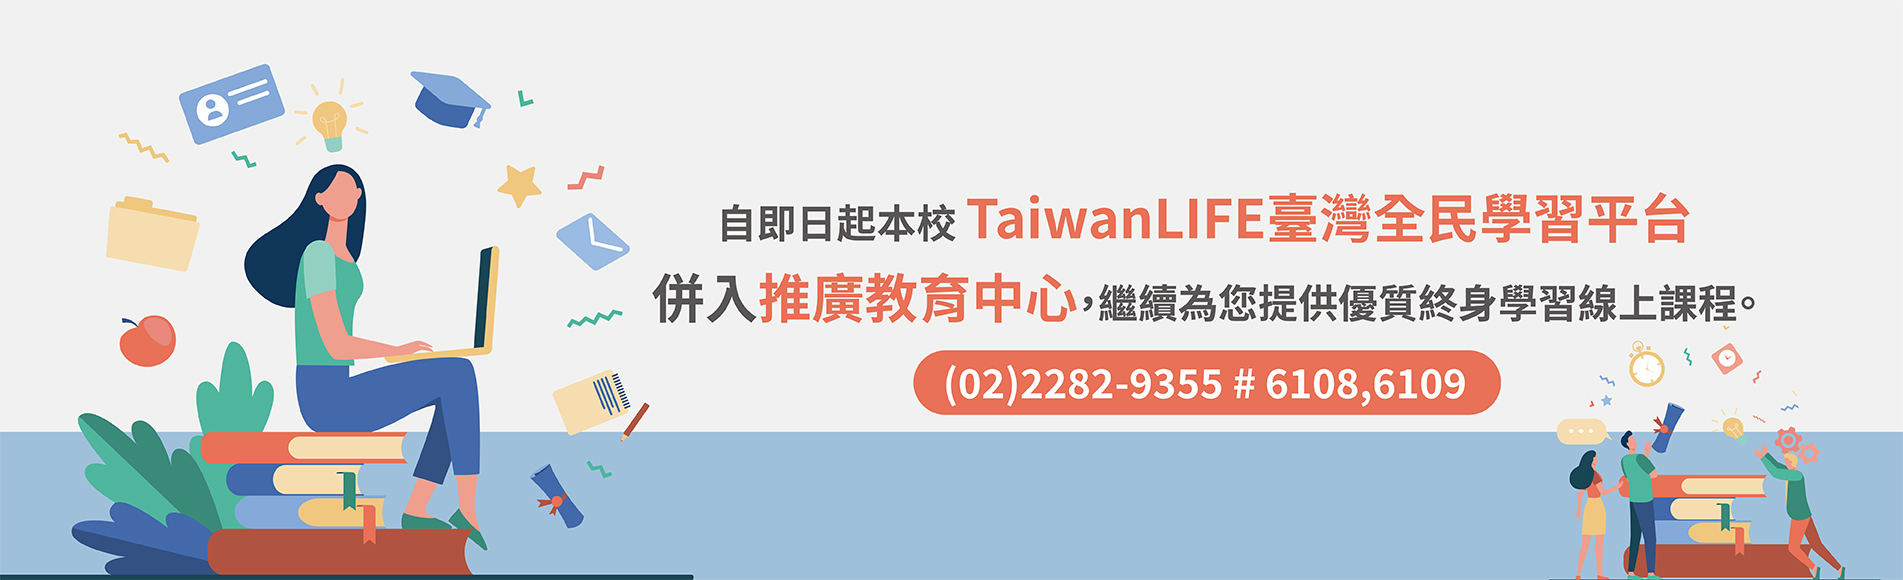 TaiwanLife併入推廣中心公告